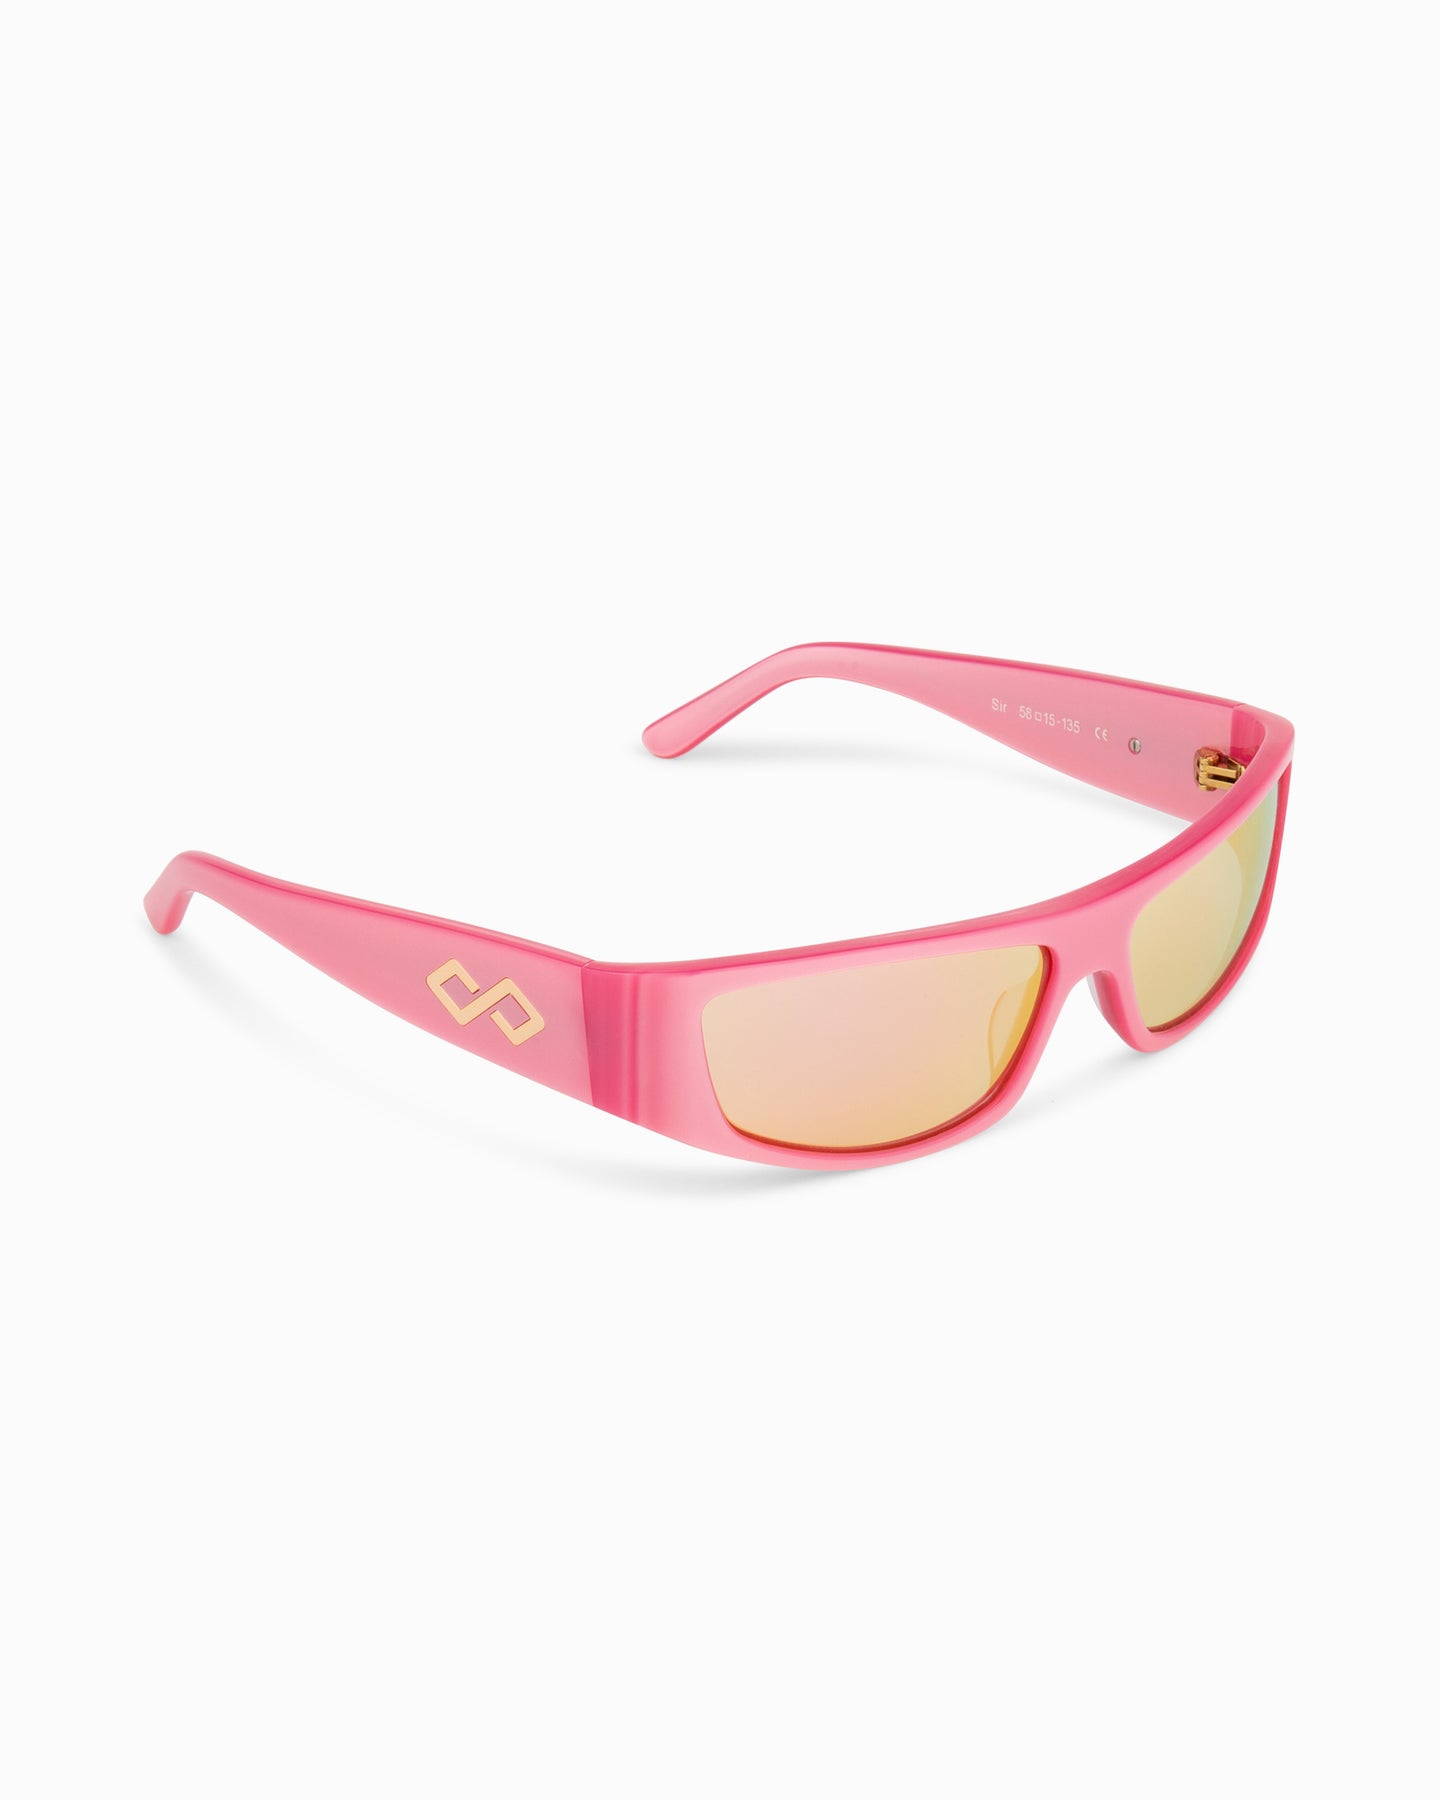 Side view | Rectangular sunglasses with Mirror Pink lenses and Pink frames | Acetate | Sir | Women's sunglasses | Karen Wazen Eyewear